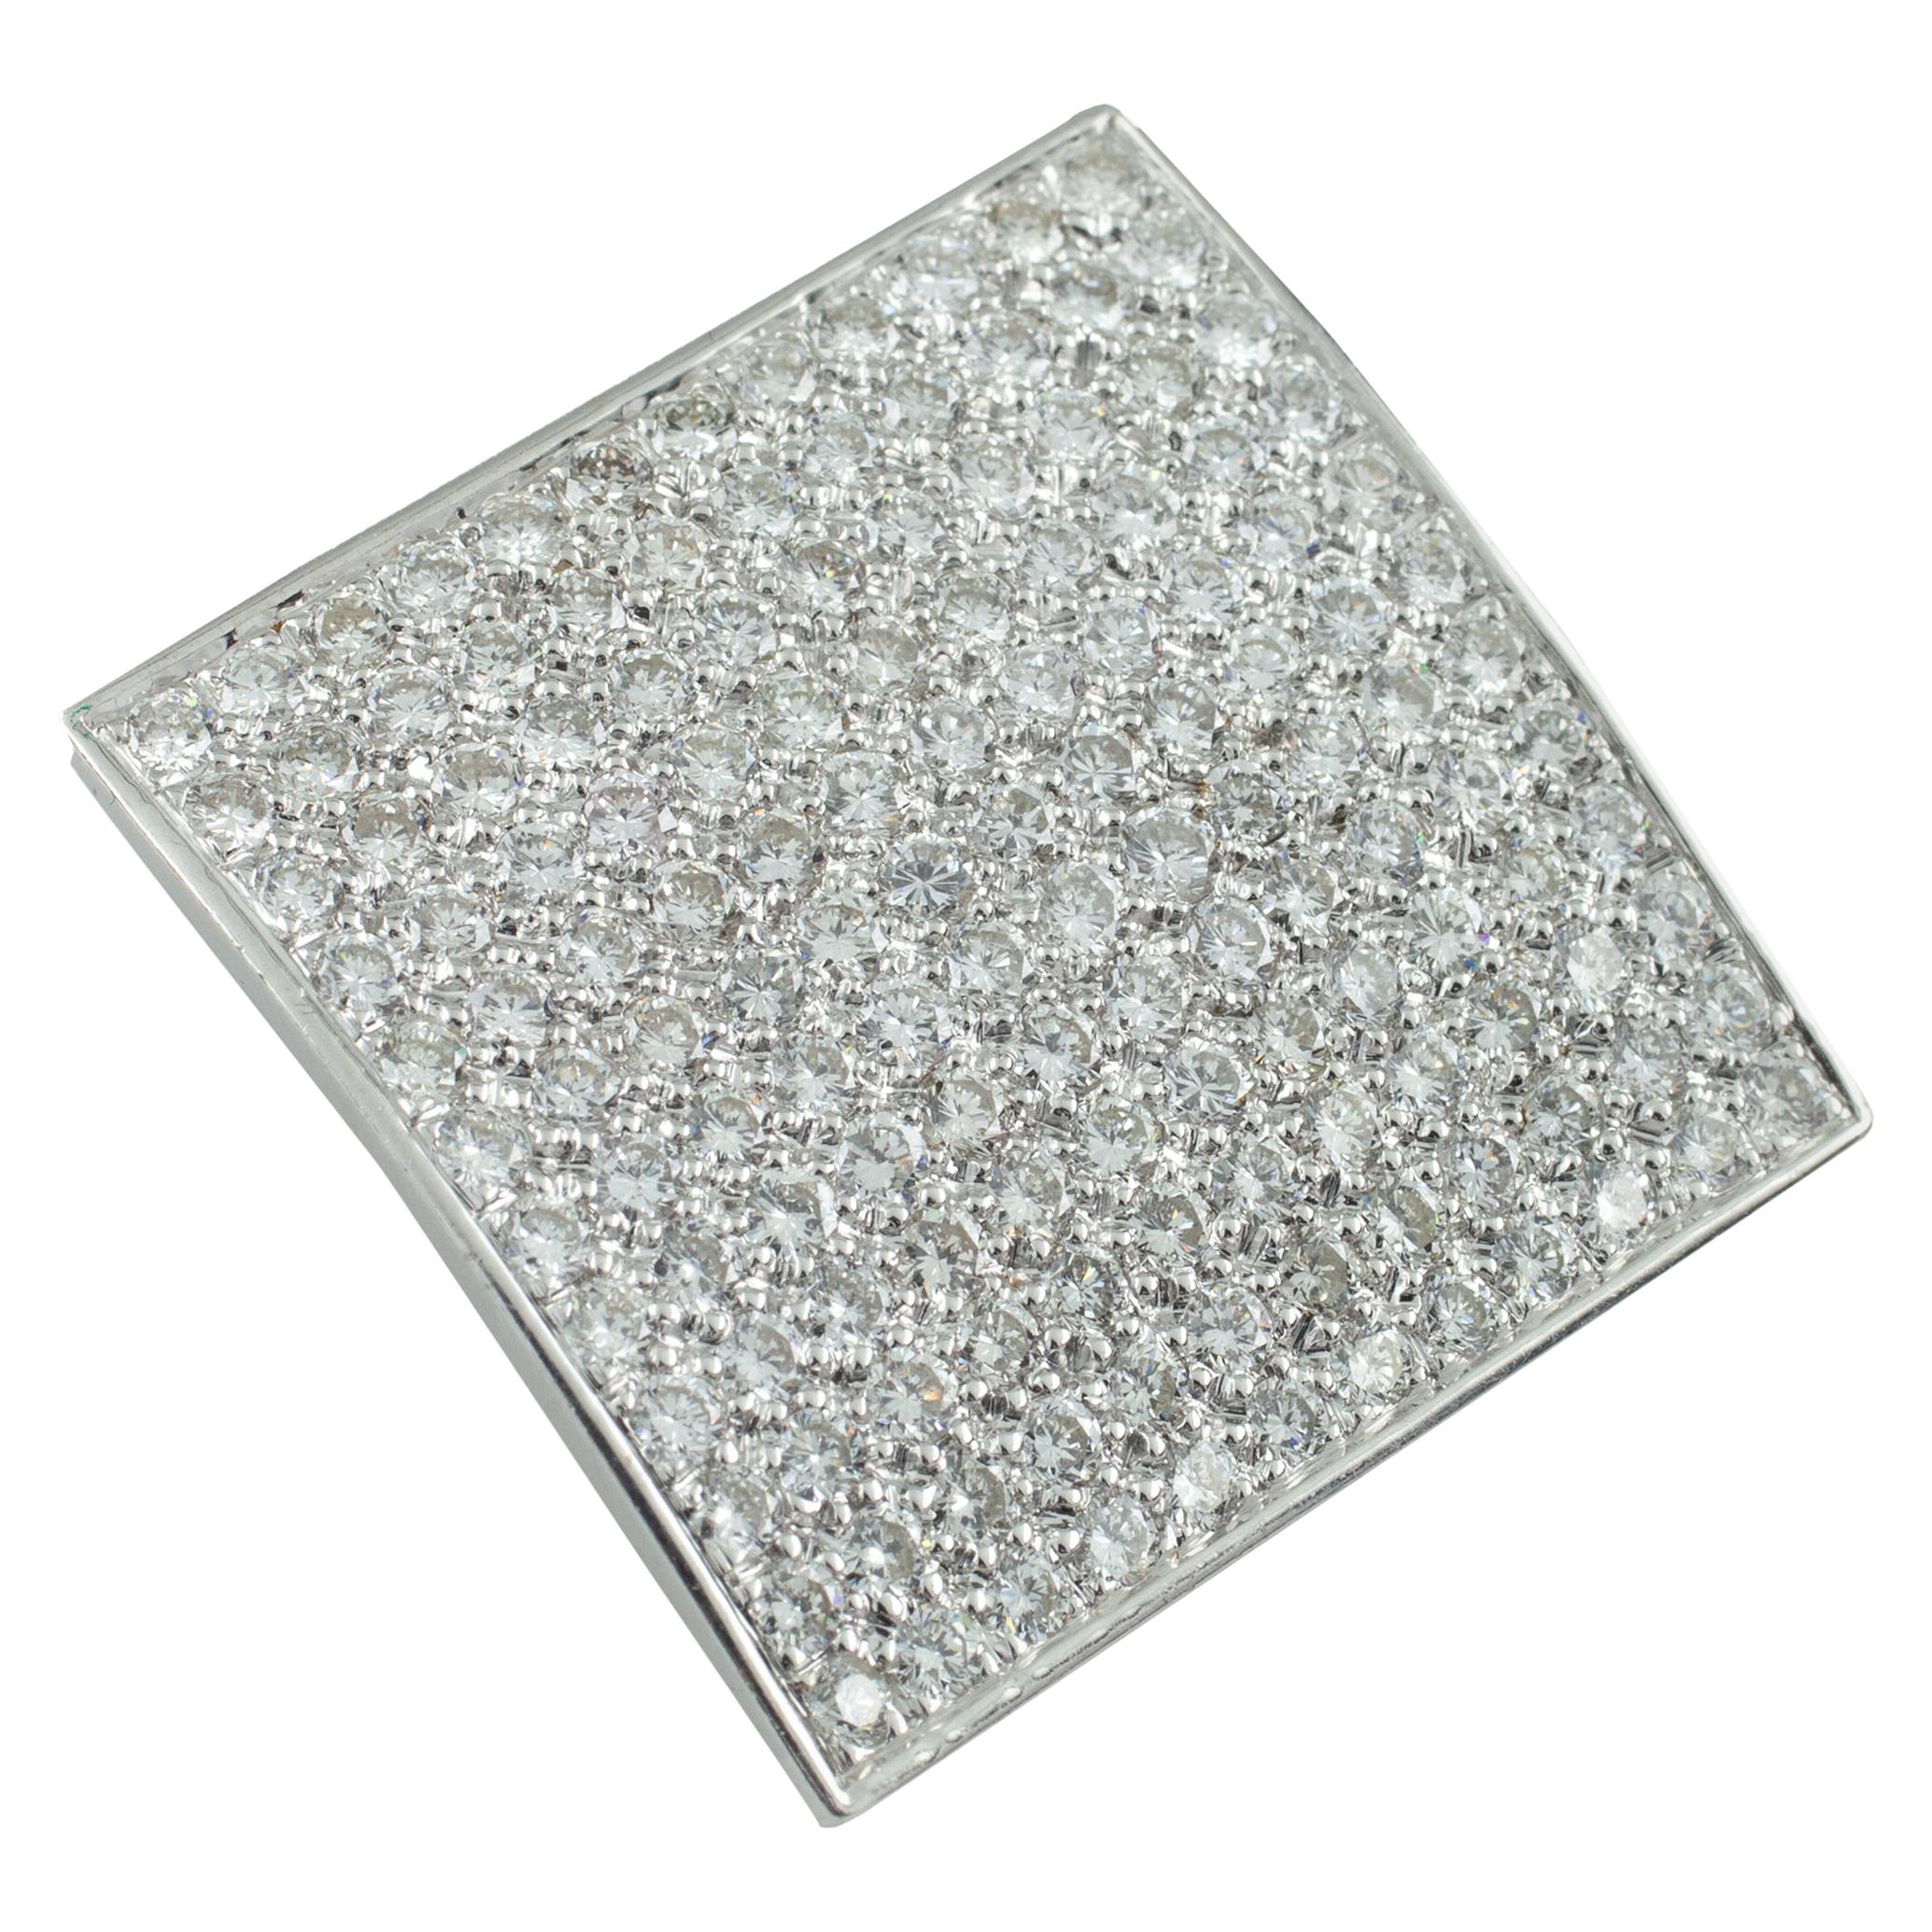 3.50 Carat Diamond 18 Karat White Gold Square Plaque Pendant For Sale